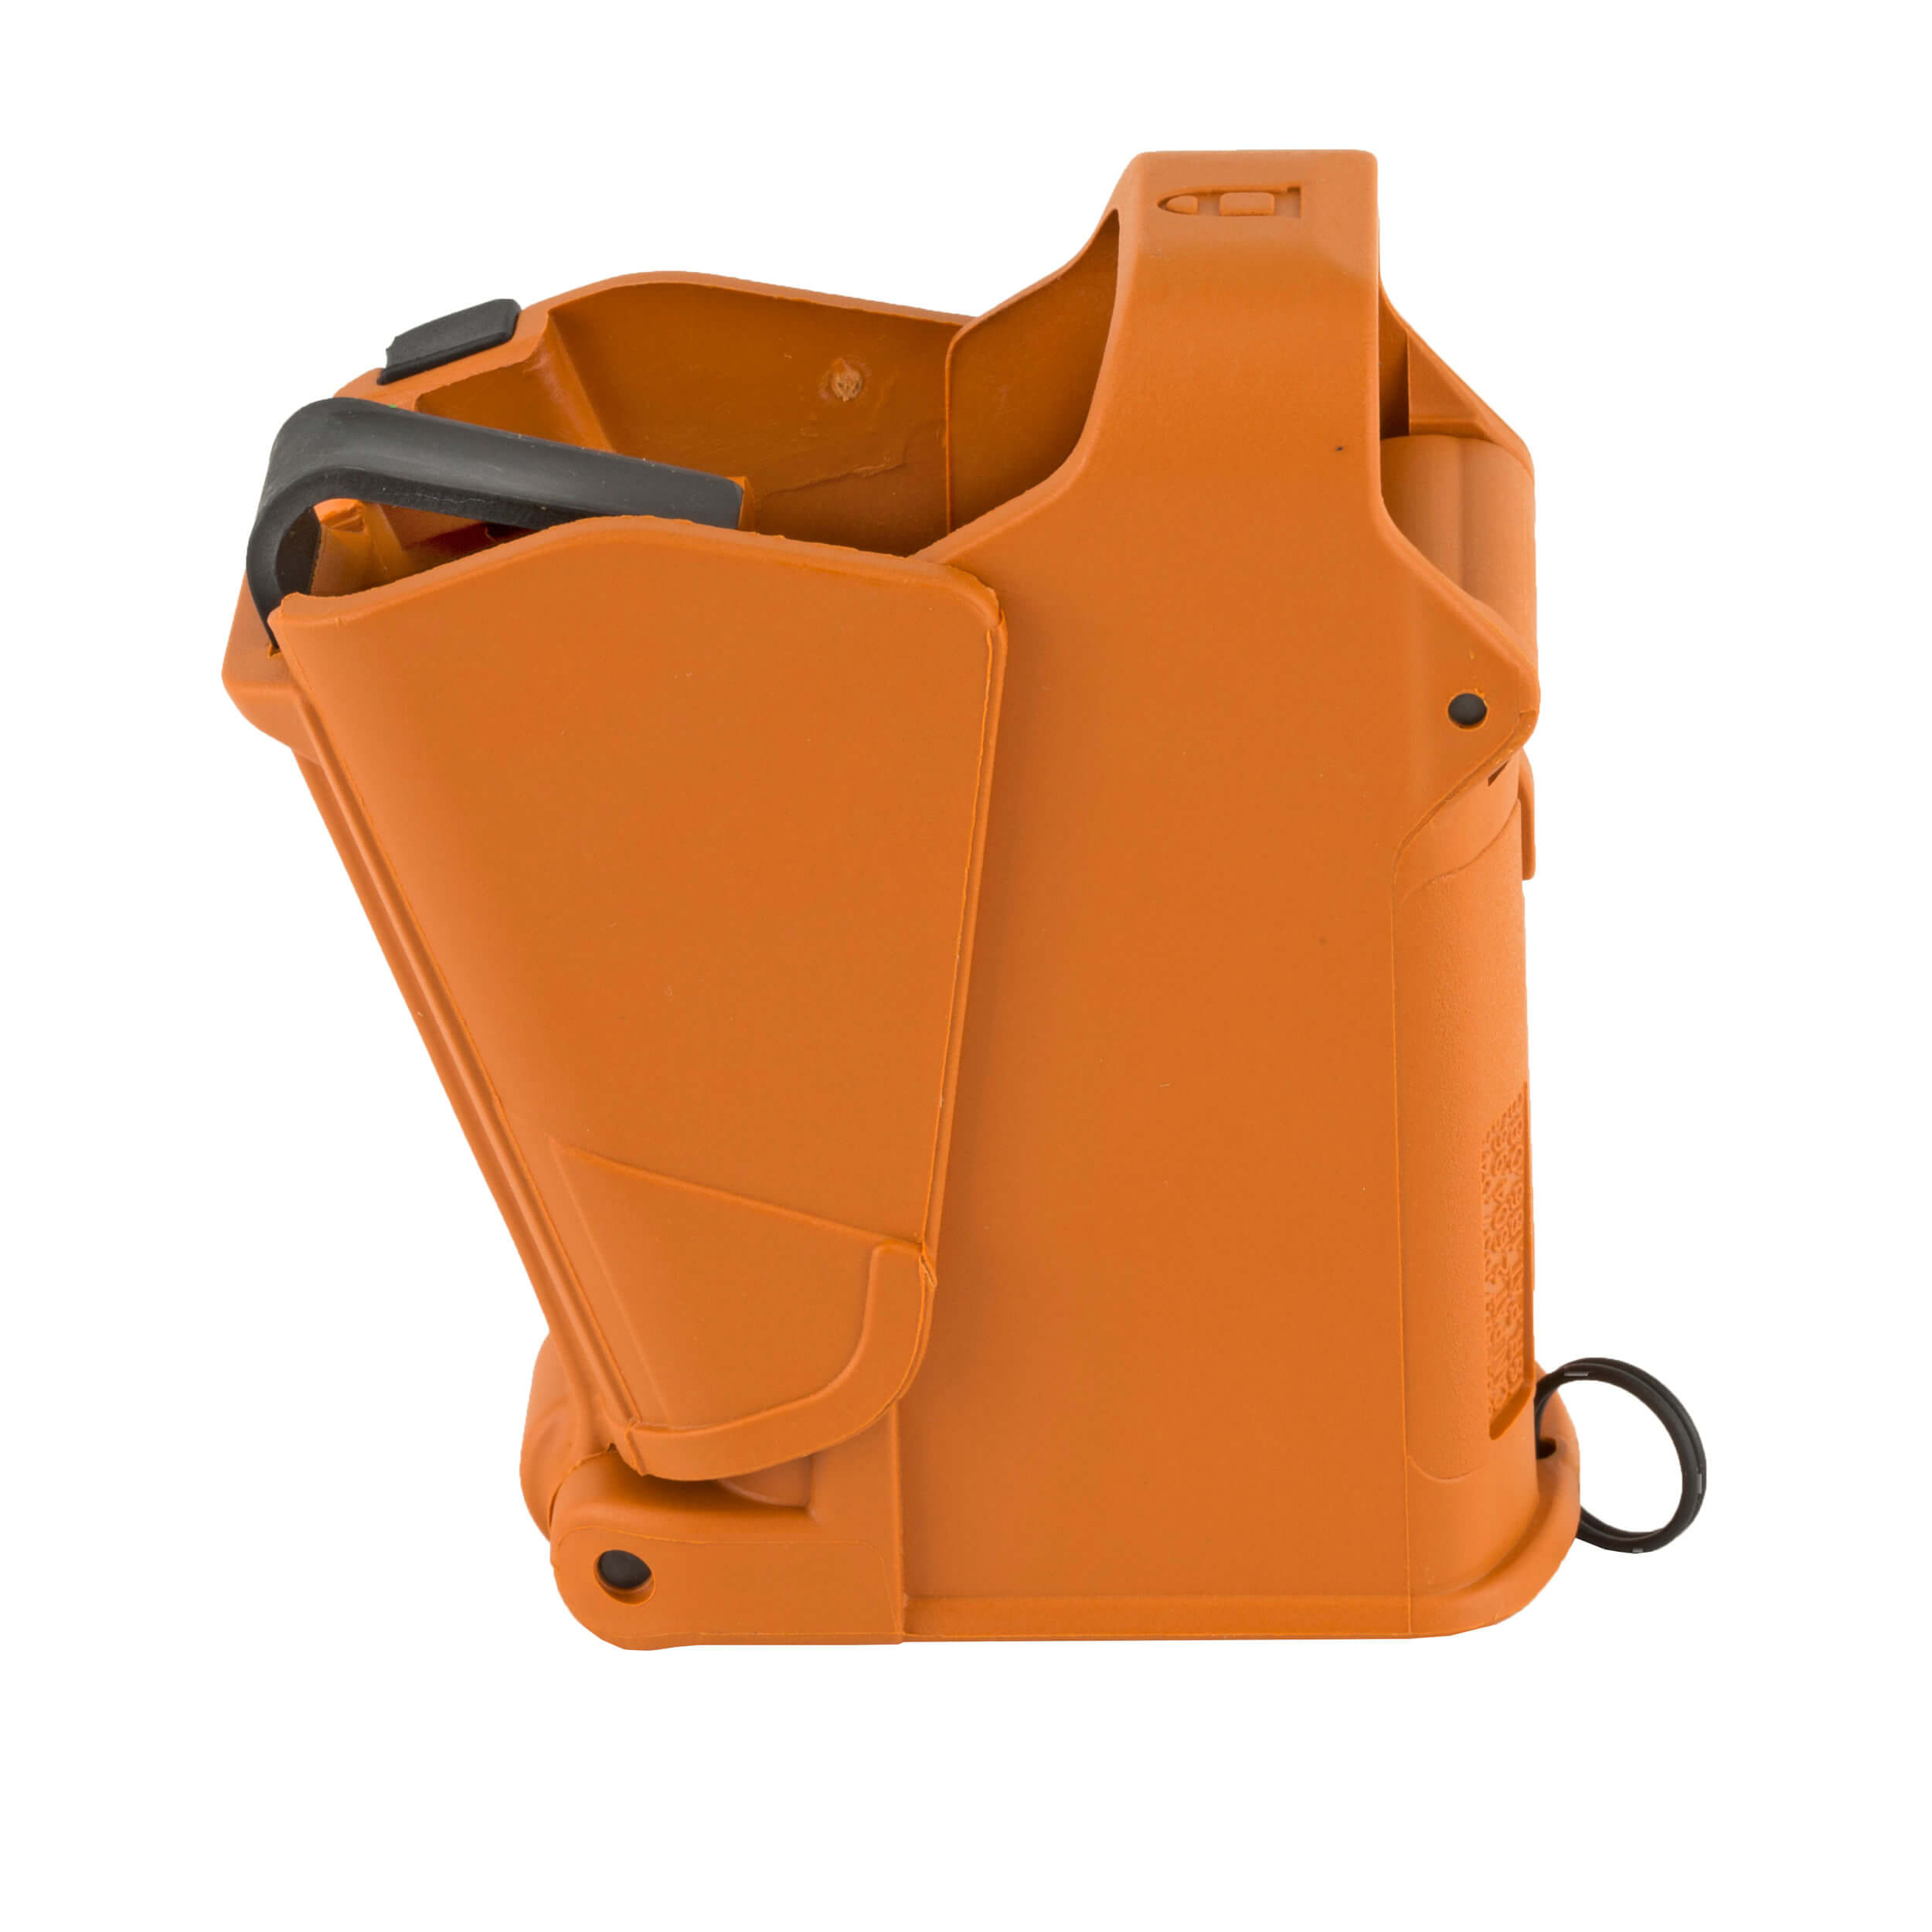 maglula UpLULA  9 mm to .45ACP universal pistol magazine loader  Brown Orange UP60BO